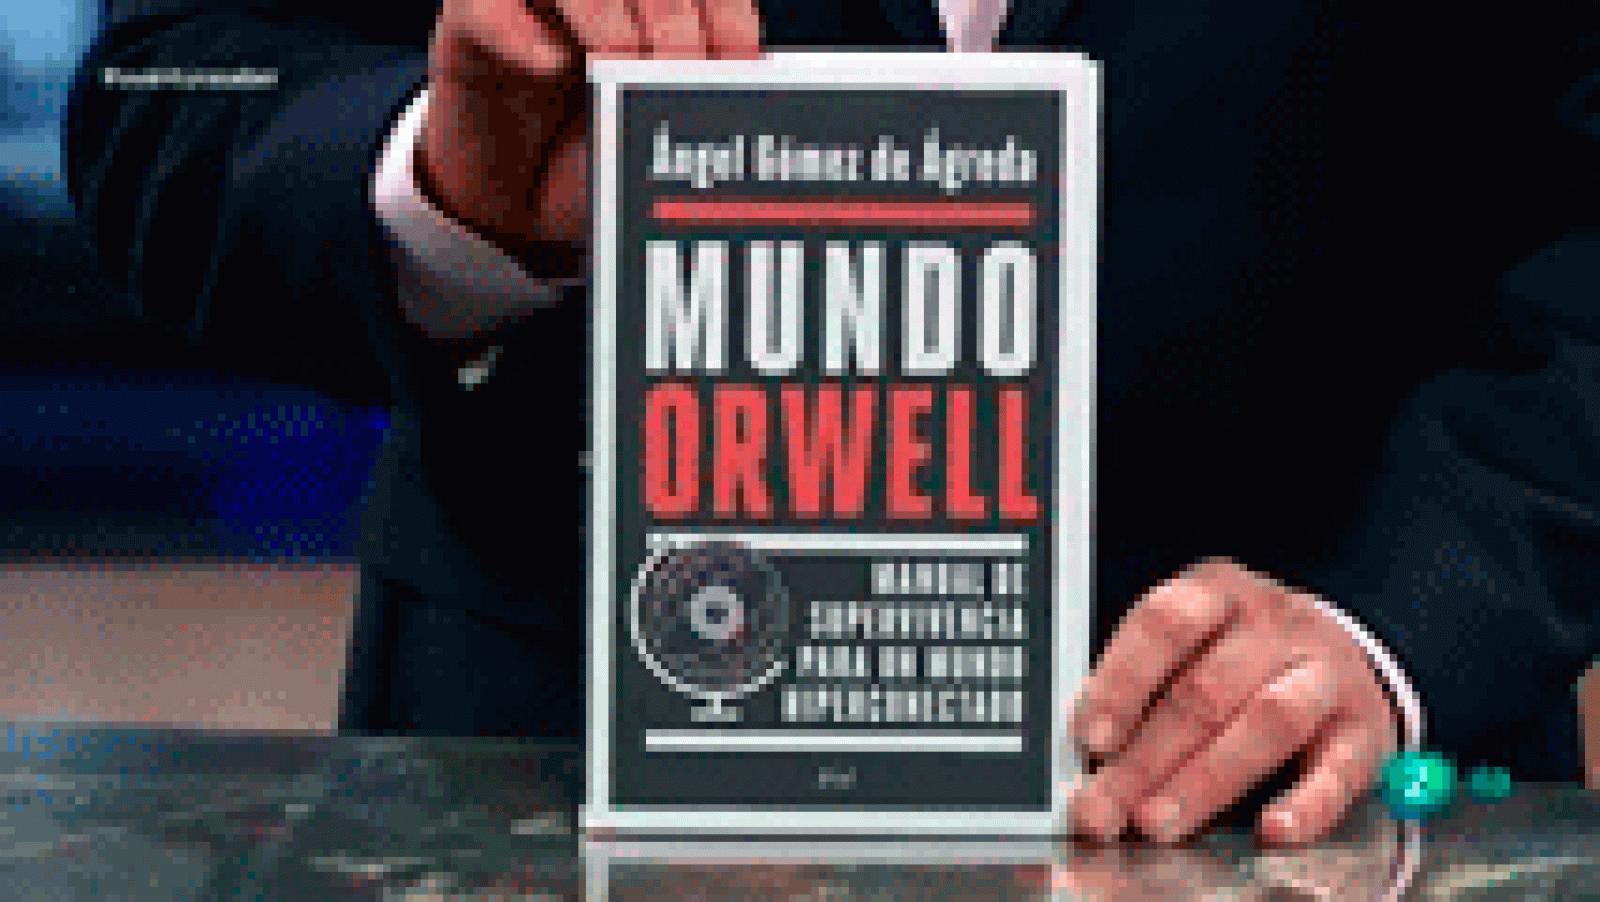 La aventura del Saber: La aventura del saber. Mundo Orwell. Manual de supervivencia para un mundo hiperconectado | RTVE Play